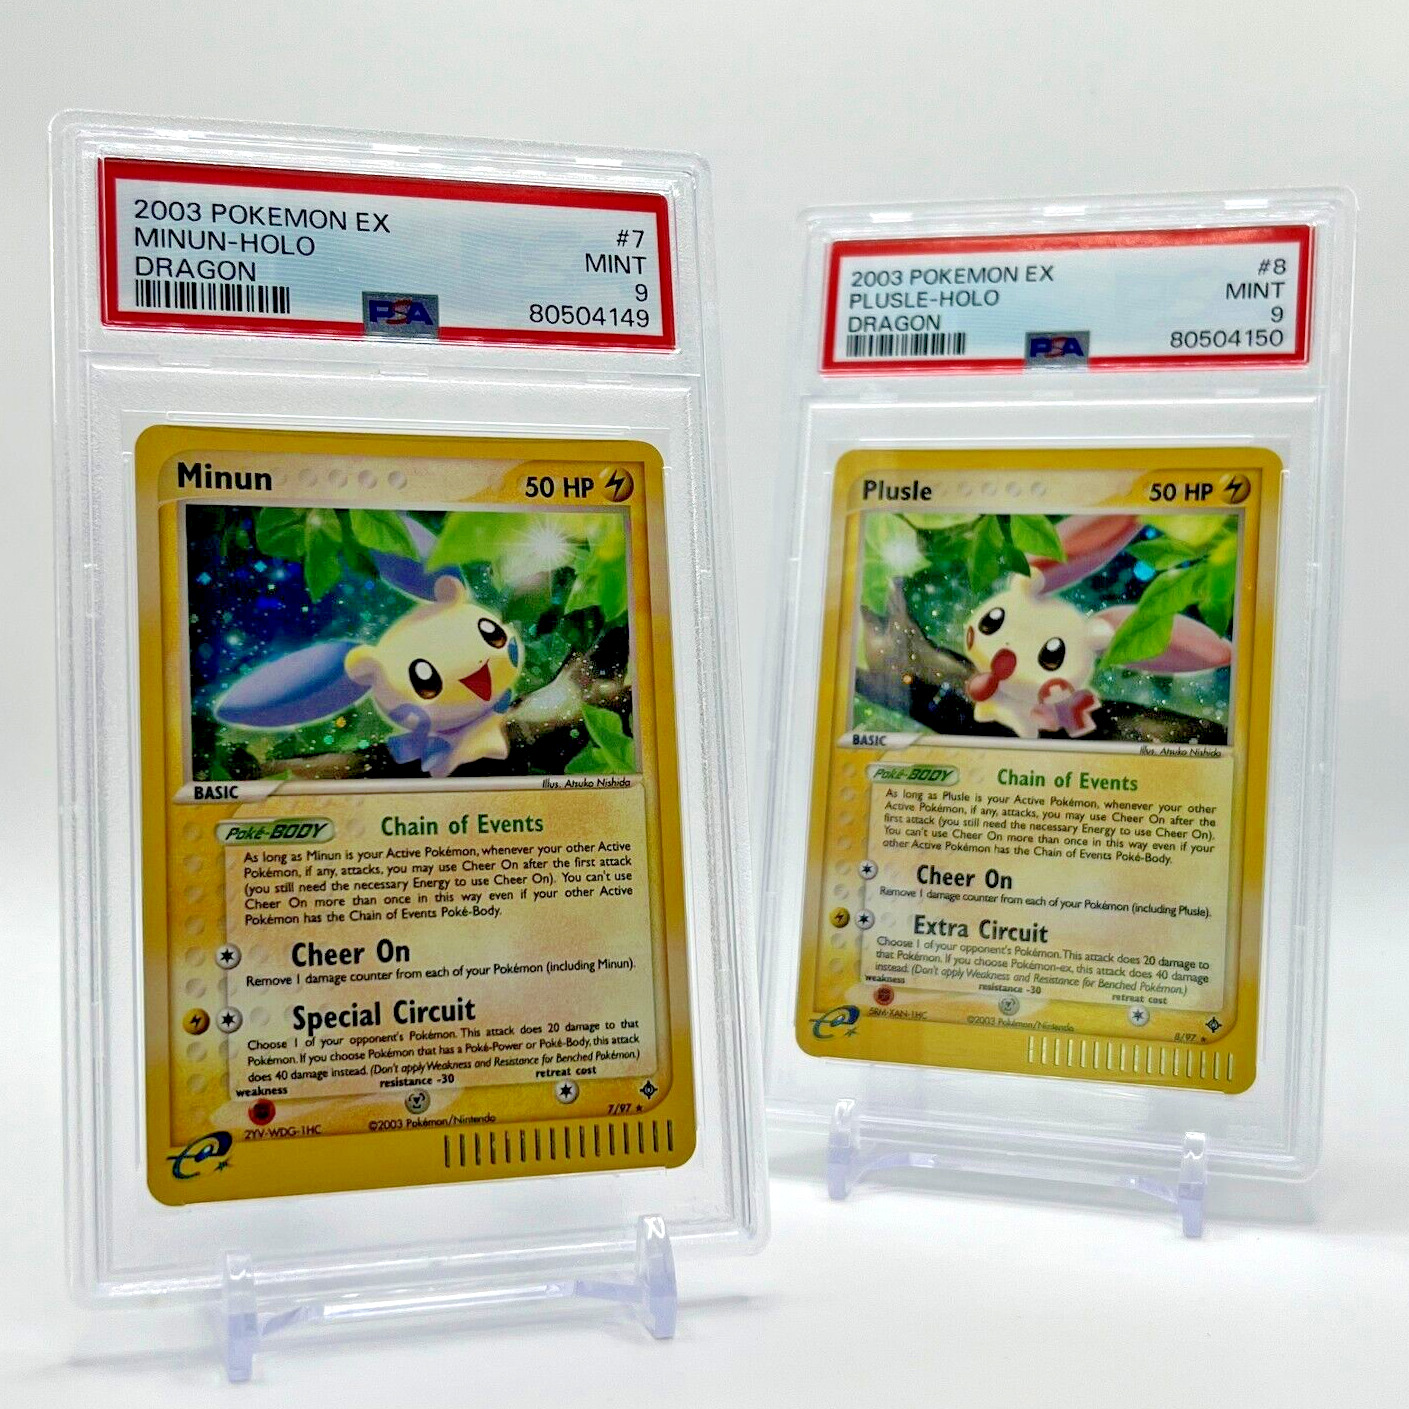 PSA 9 Minun & Plusle Holo - 07/08/97 EX Dragon - Pokemon Cards SEQUENTIAL MINT